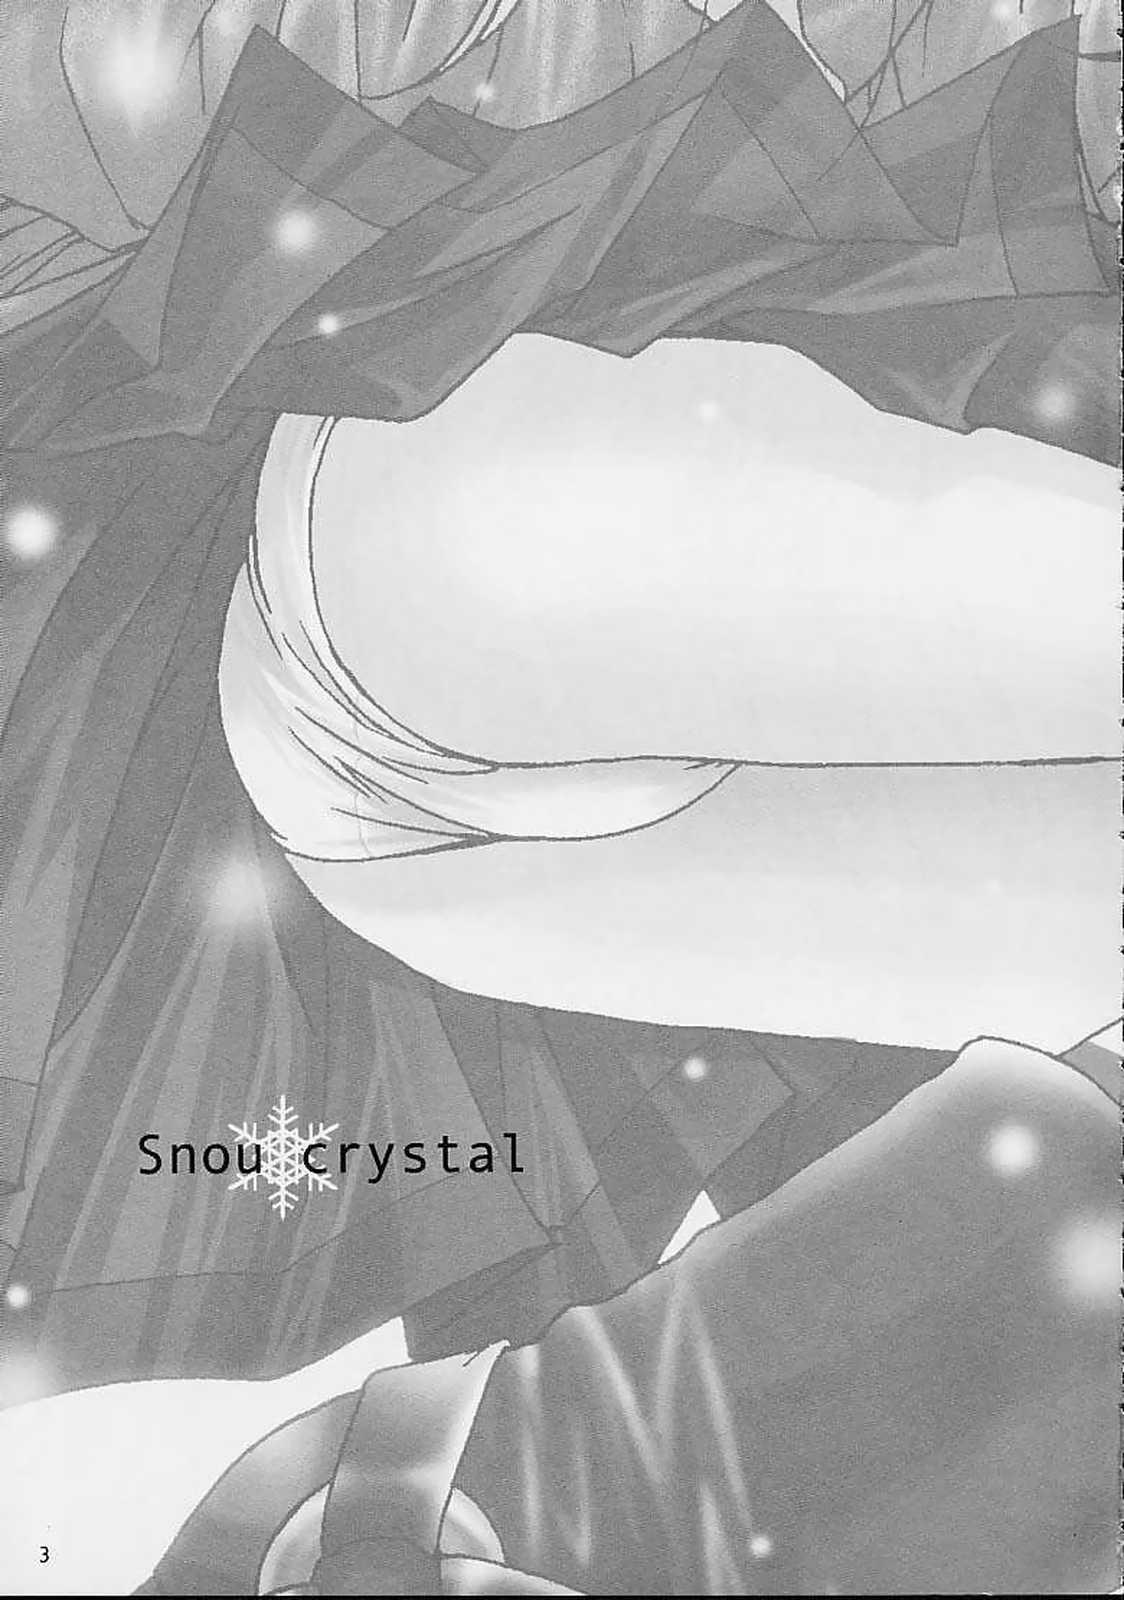 Snow crystal 1